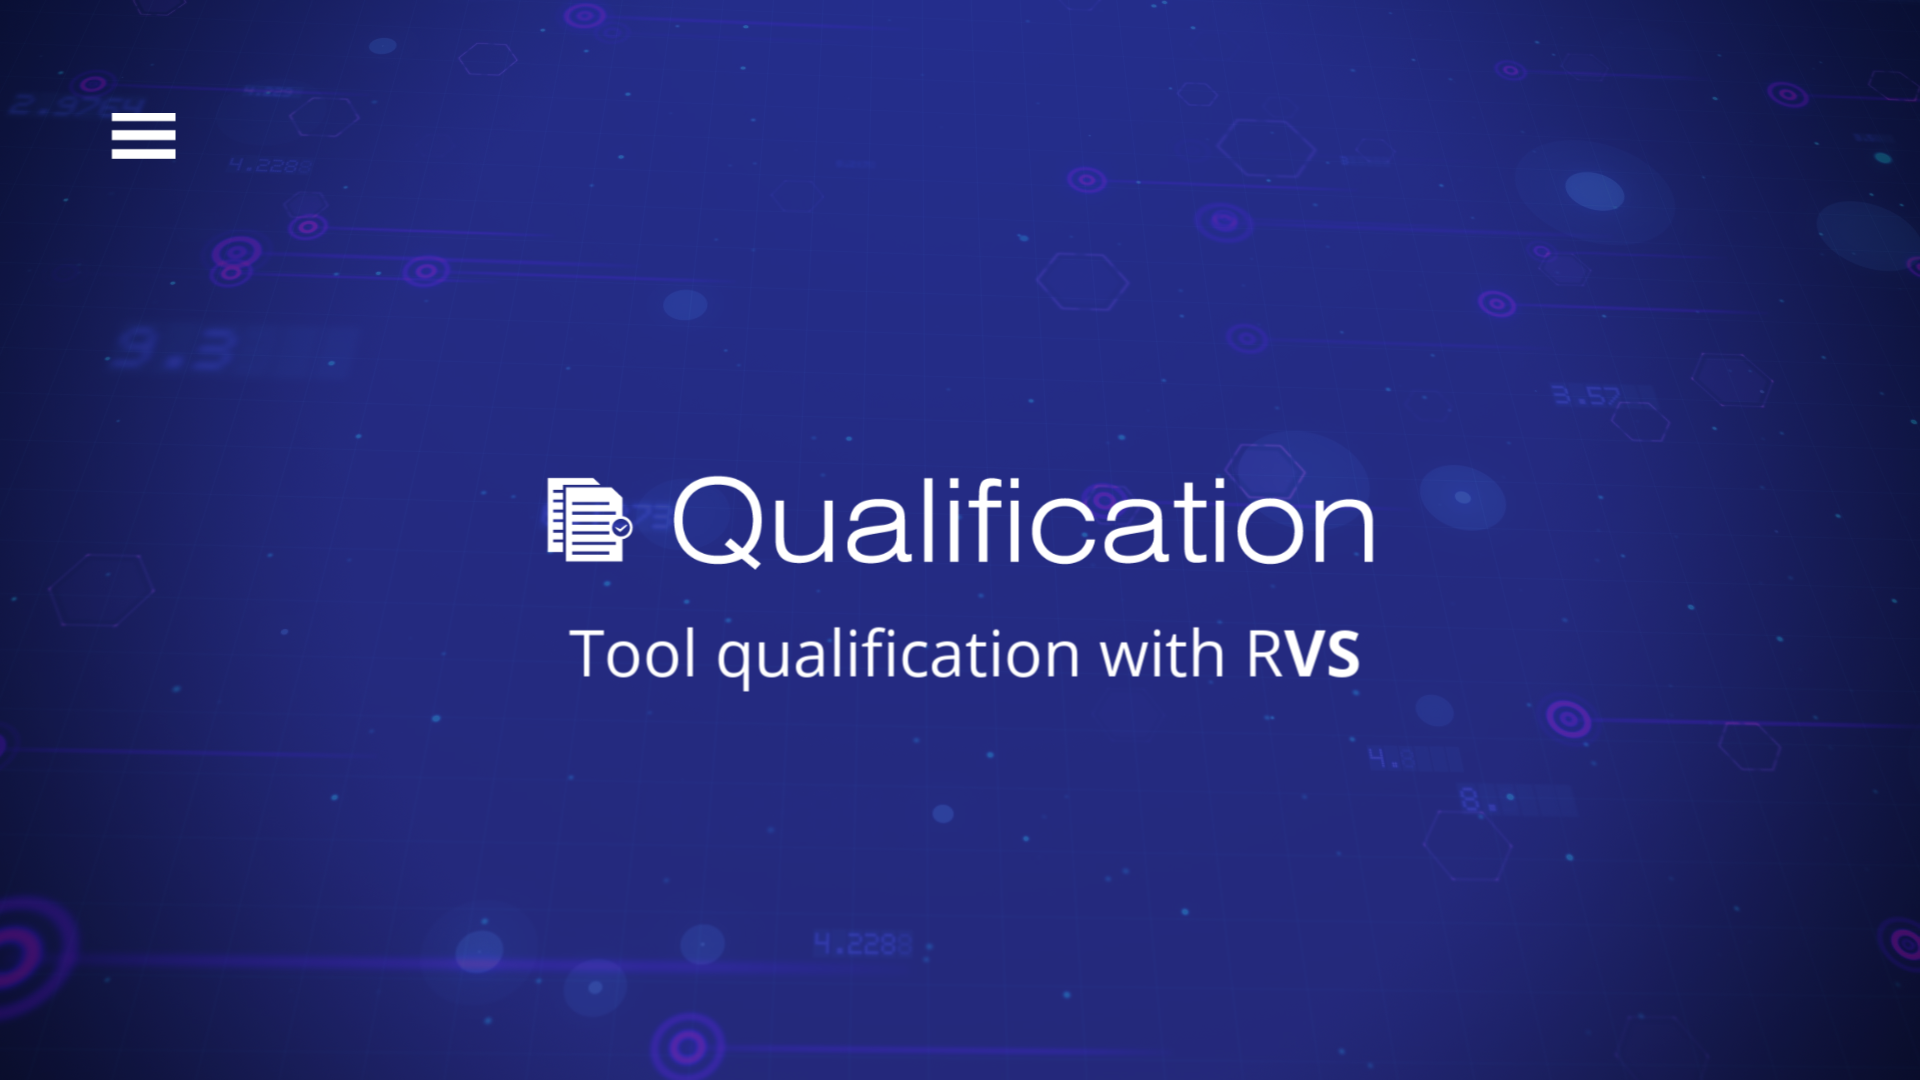 Qualification-video-thumbnail